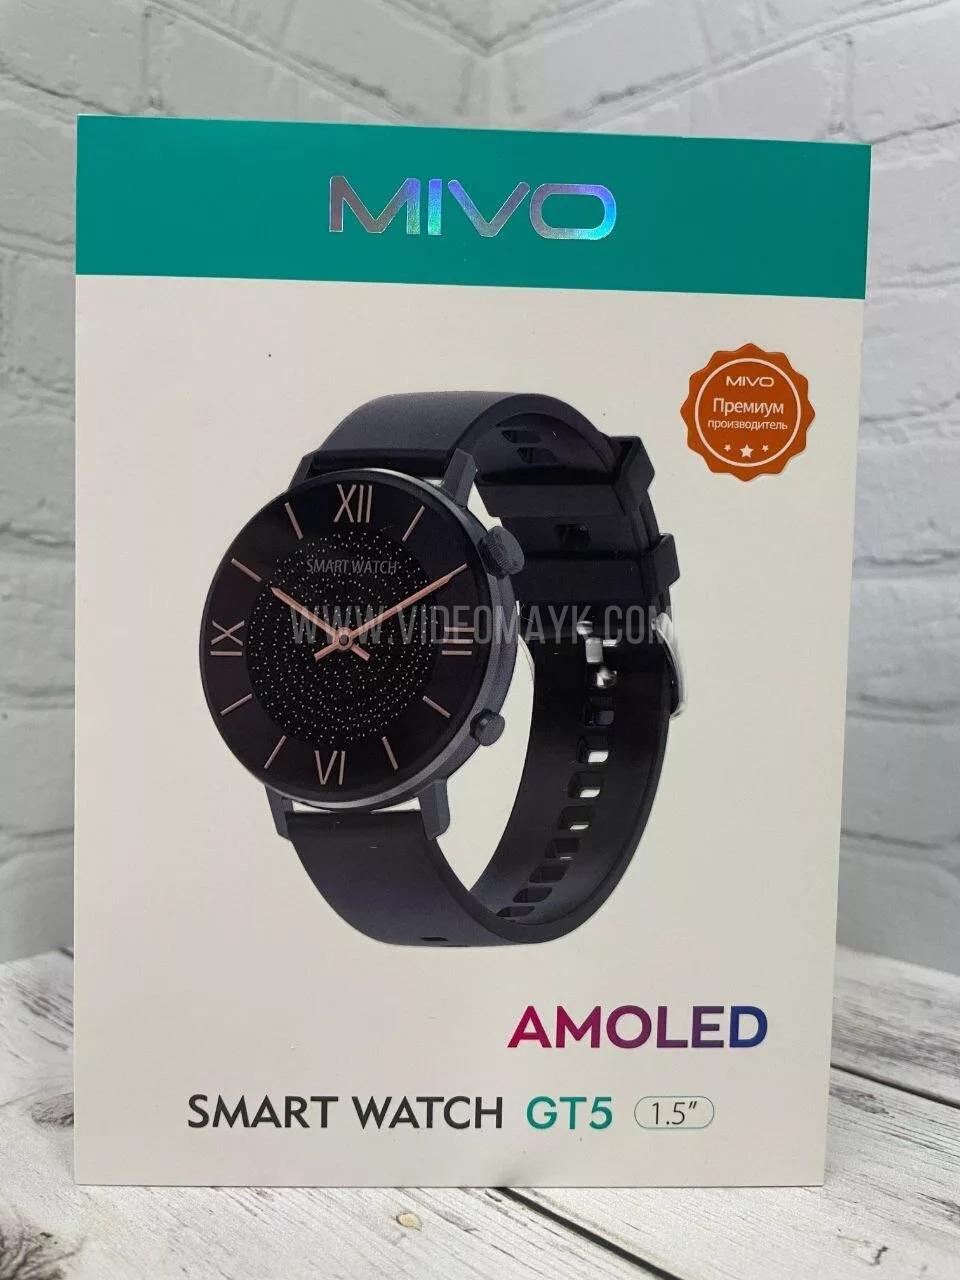 GT5 Смарт часы Mivo с Amoled дисплеем 1.5"